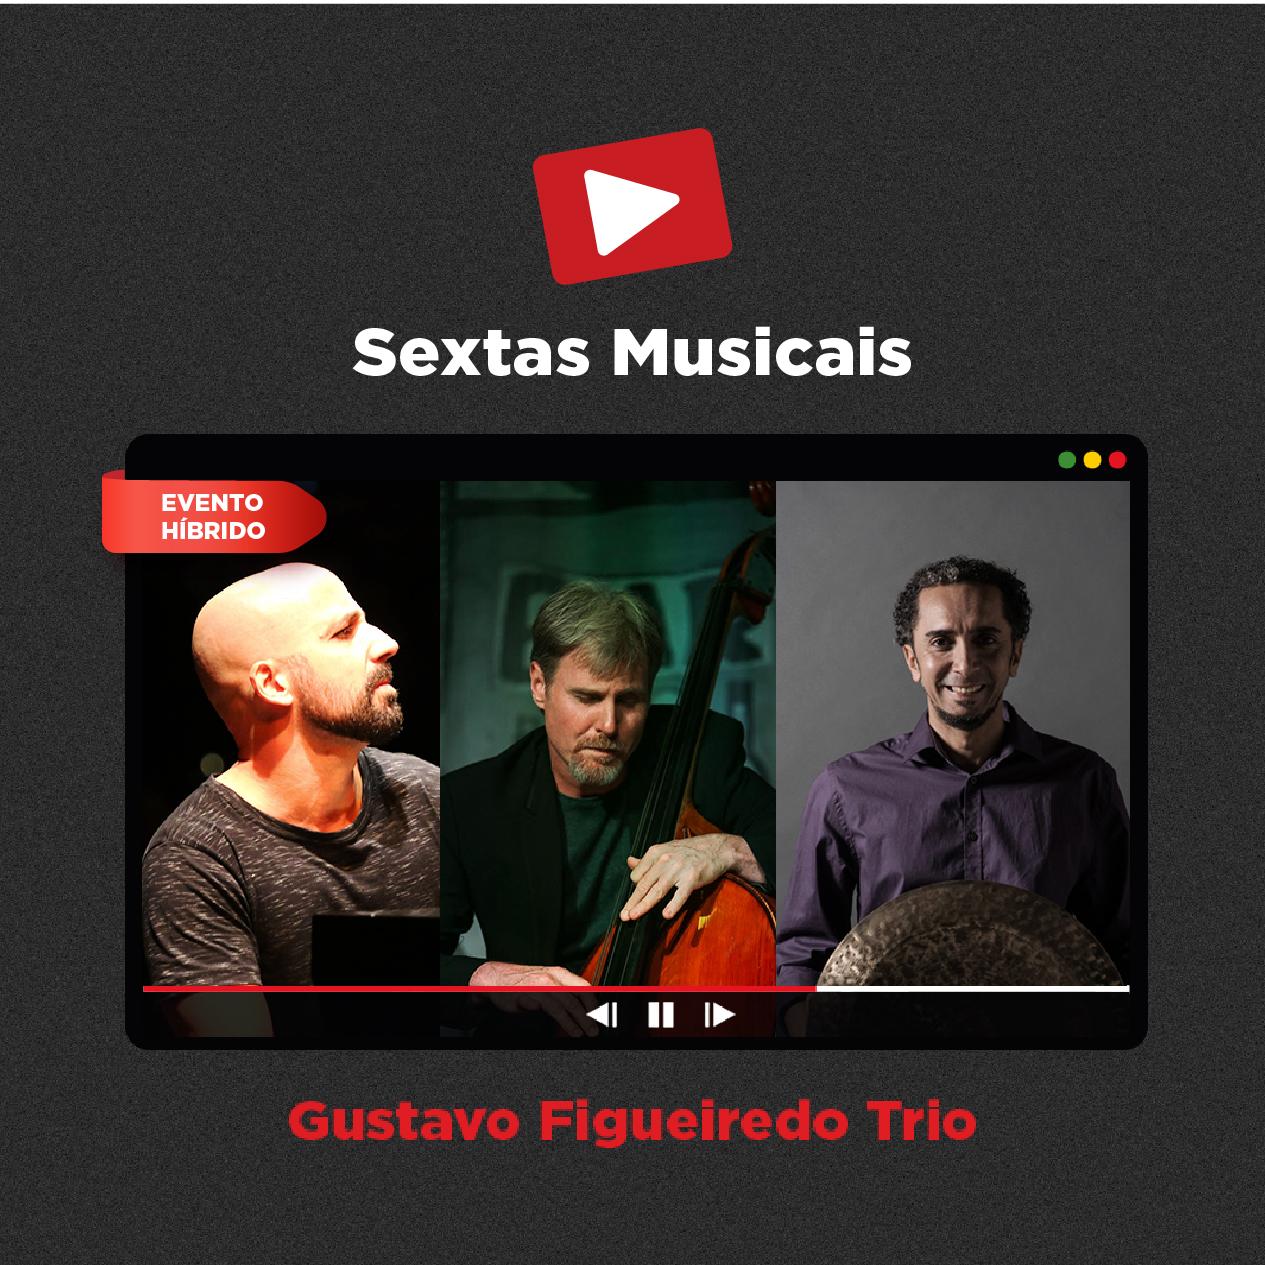 Sextas Musicais - Live Streaming: Gustavo Figueiredo Trio